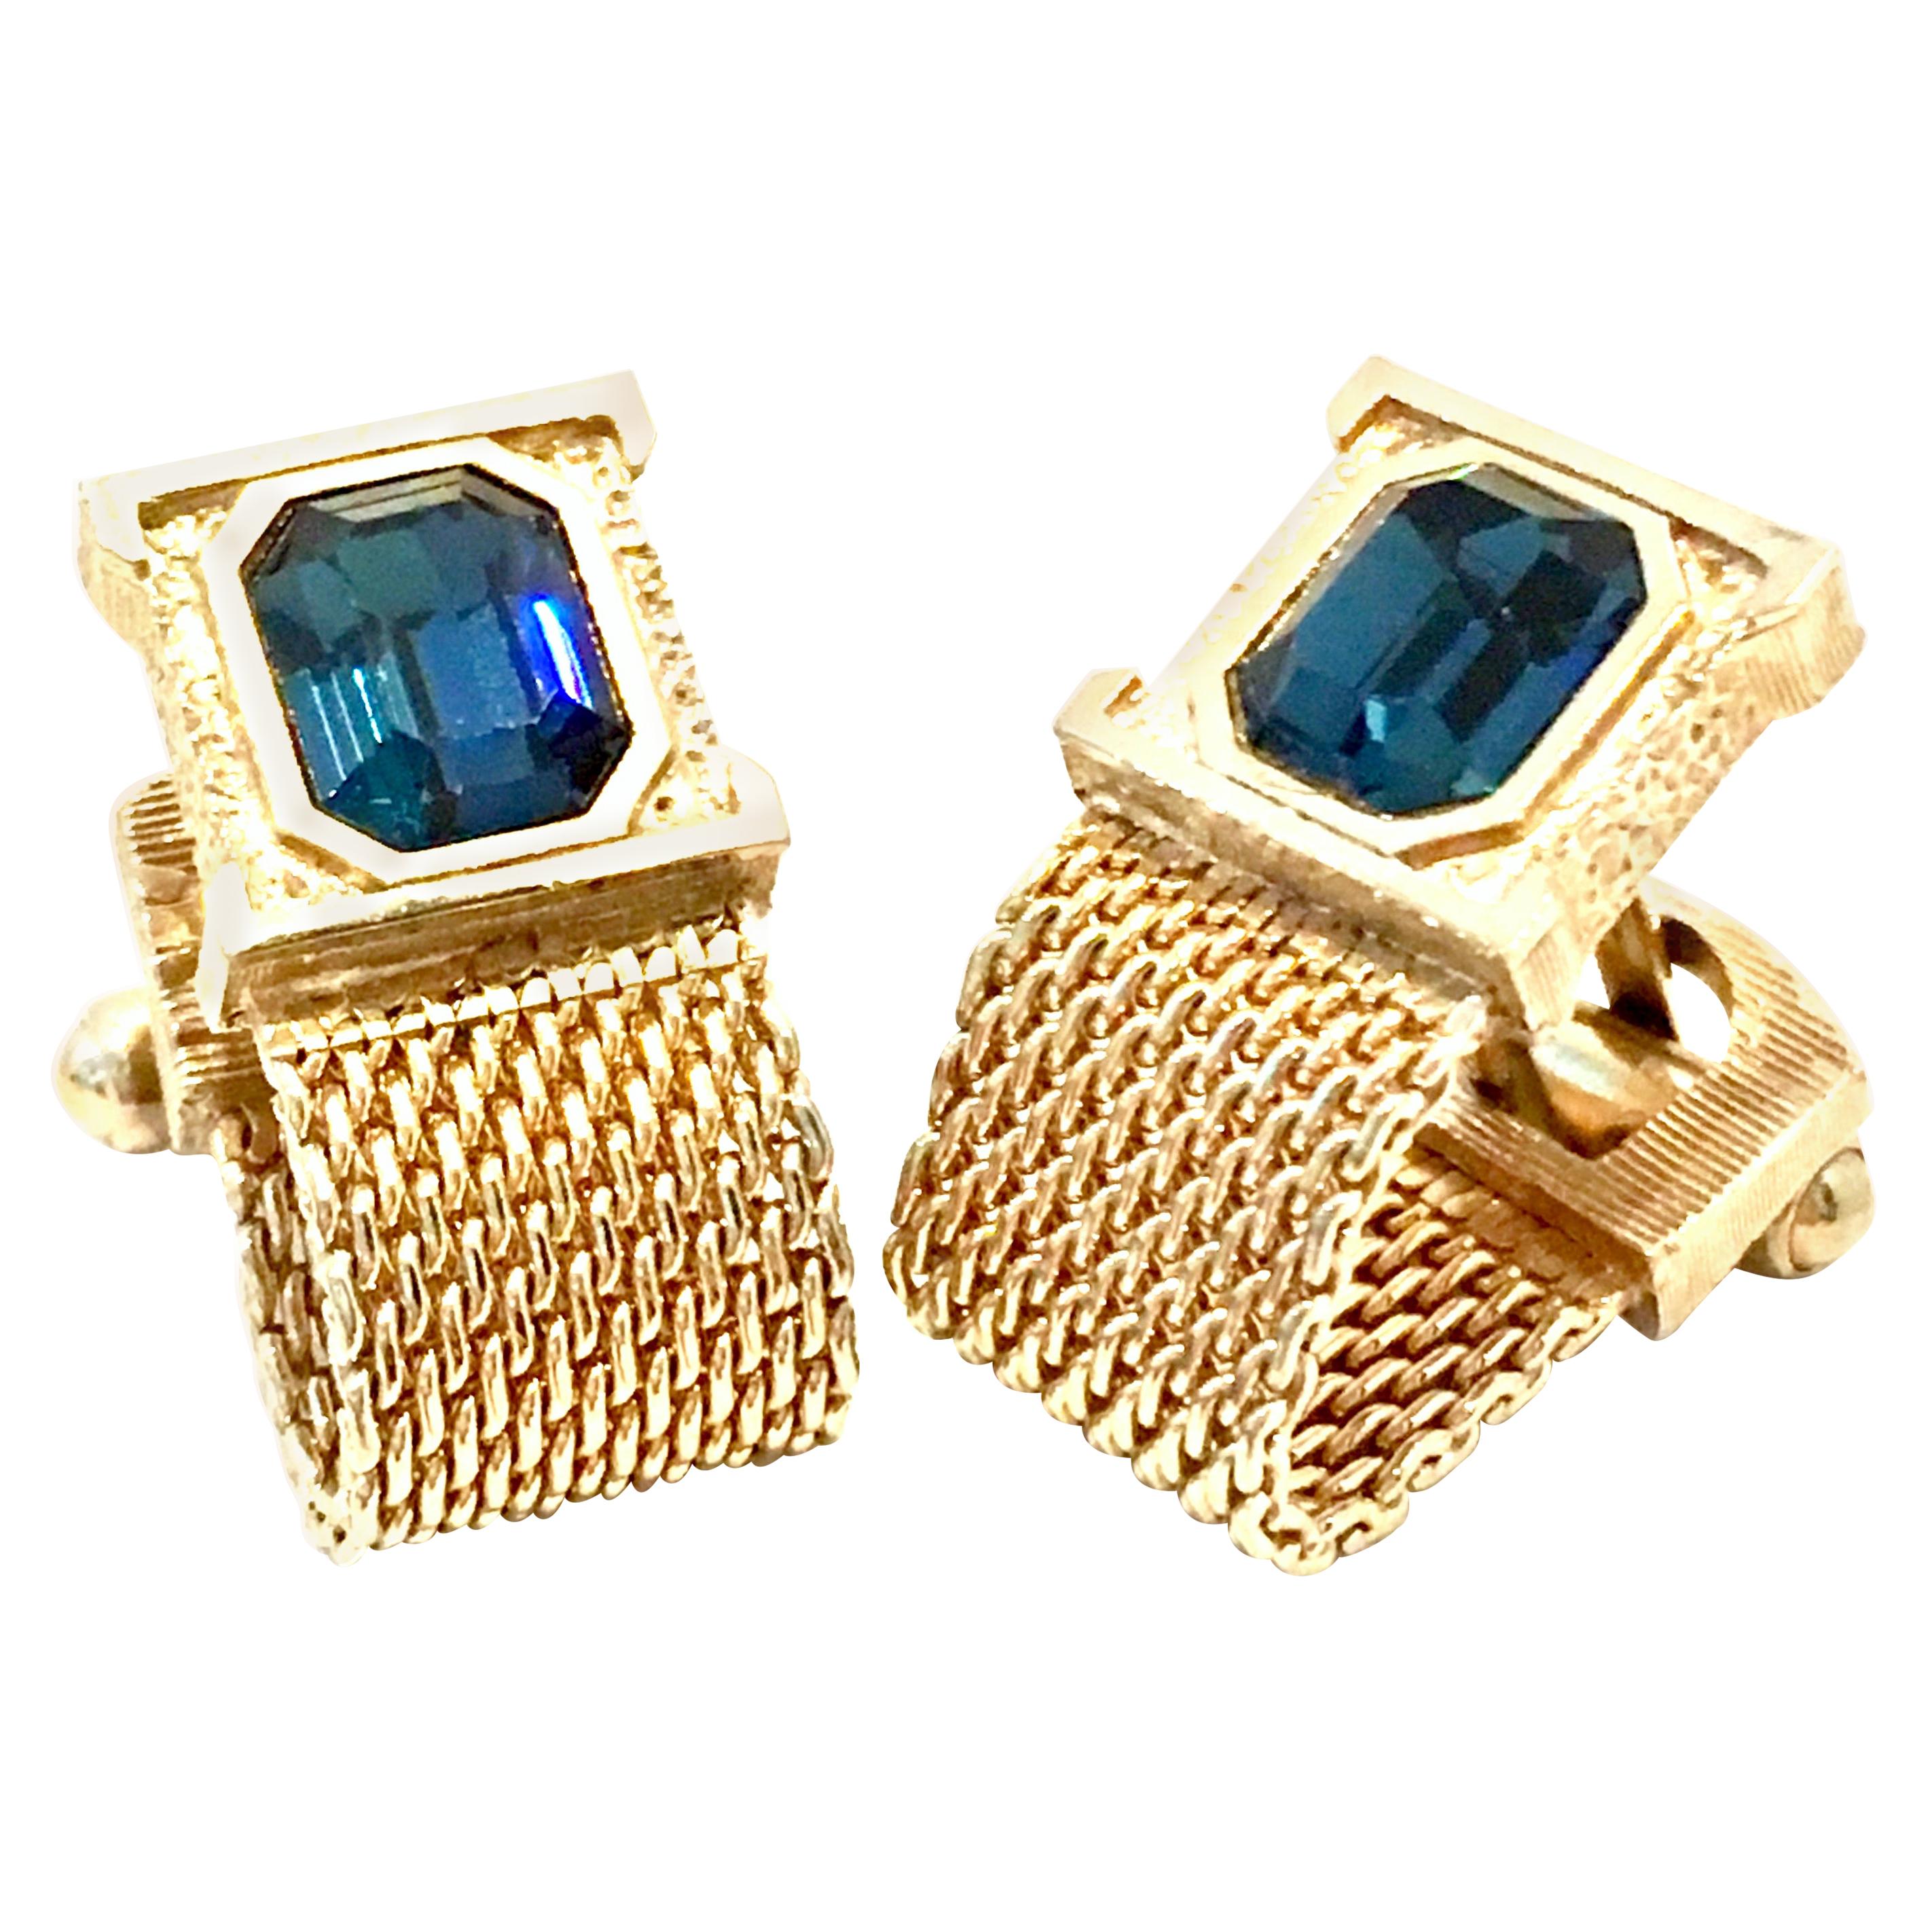 20th Century Gold & Austrian Crystal Sapphire Blue Pair Of Cufflinks By Swank